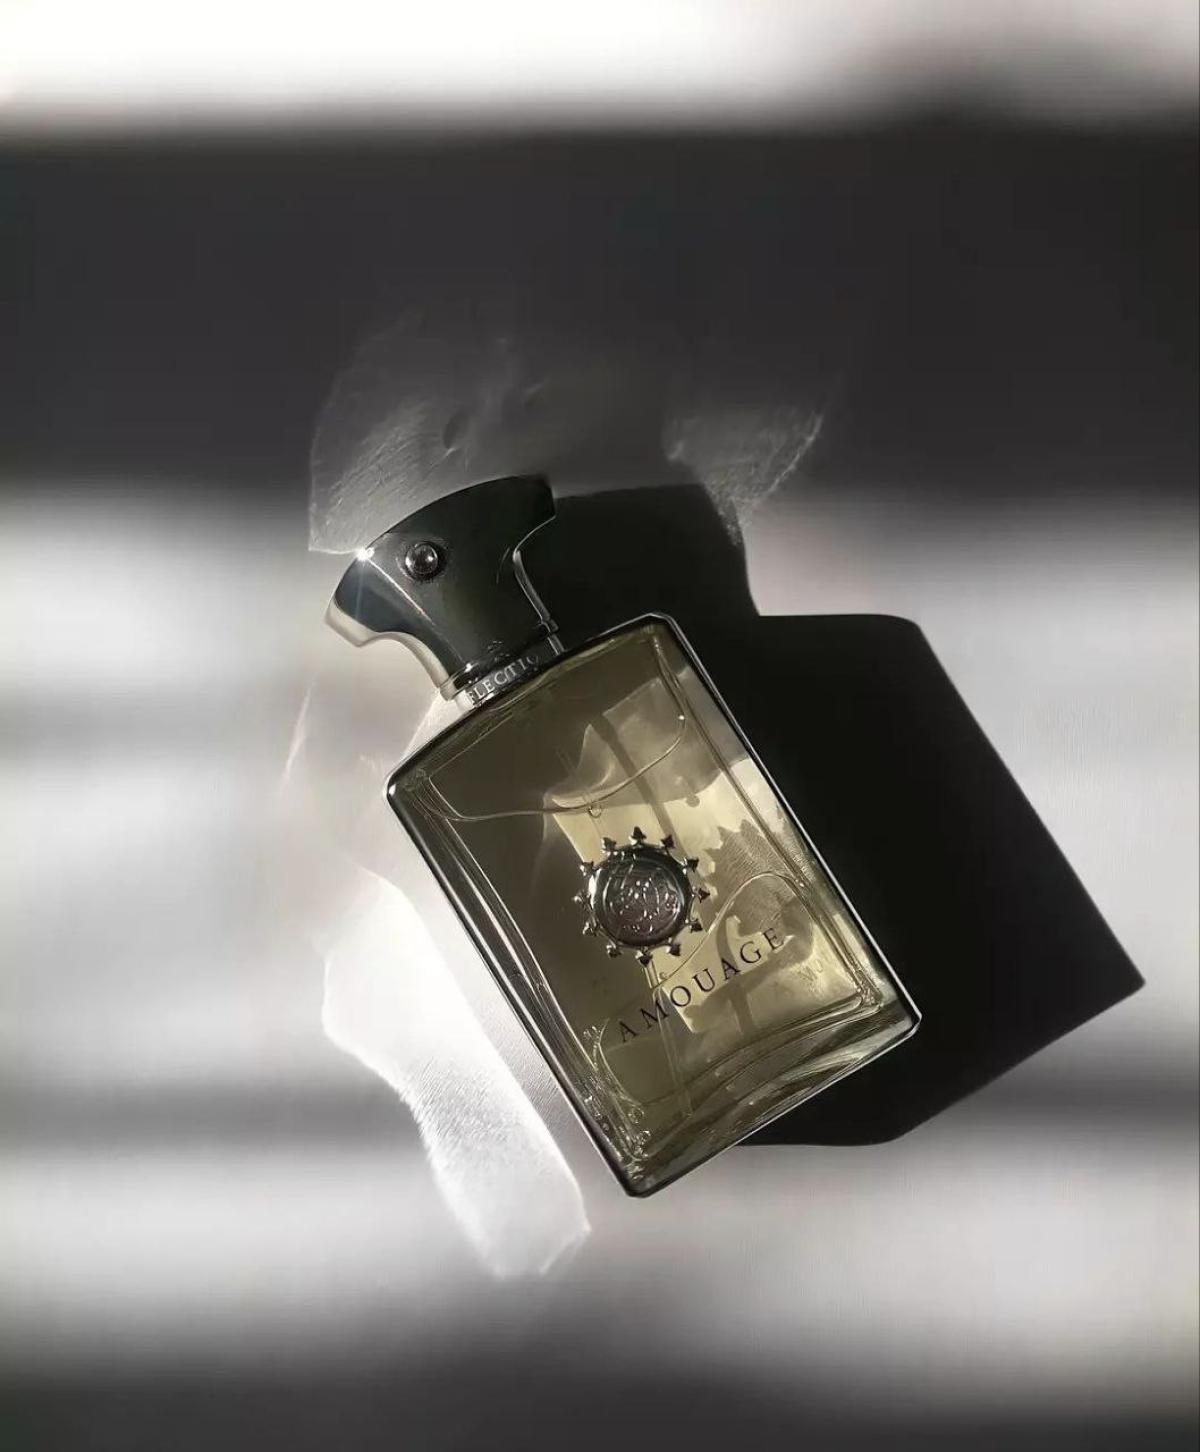 Reflection Man Amouage cologne - a fragrance for men 2006